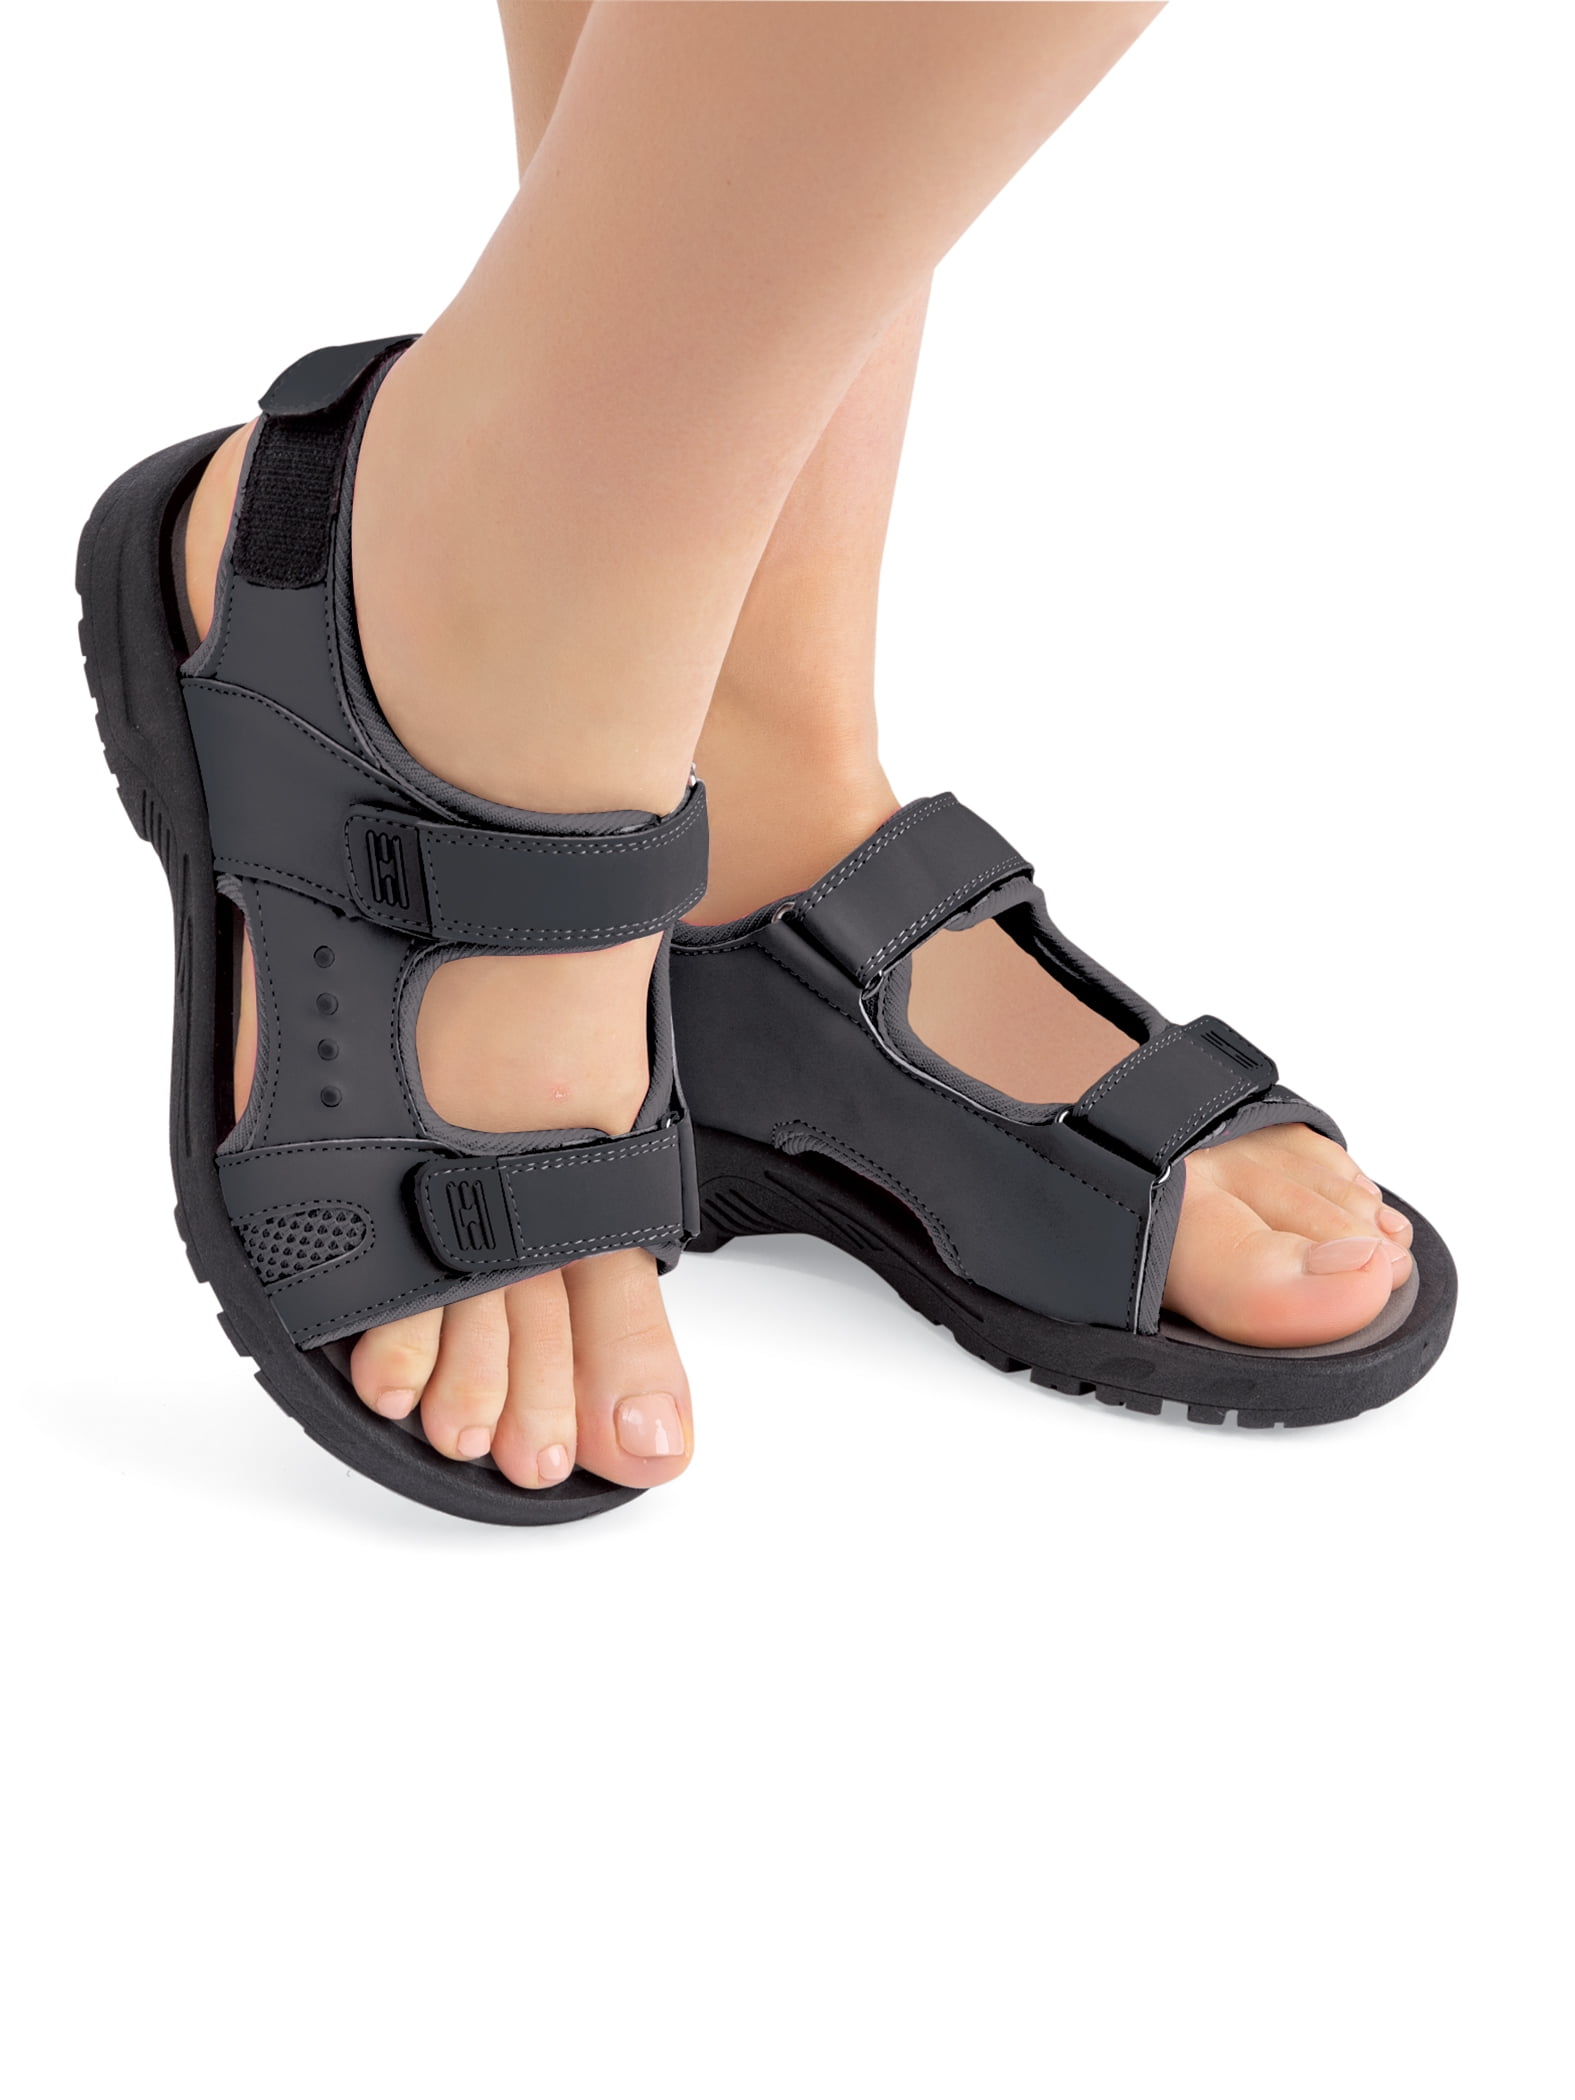 Ladies Womens Summer Toggle Sport Walking Sandals Grey Navy Size 3 4 5 6 7 8 9 